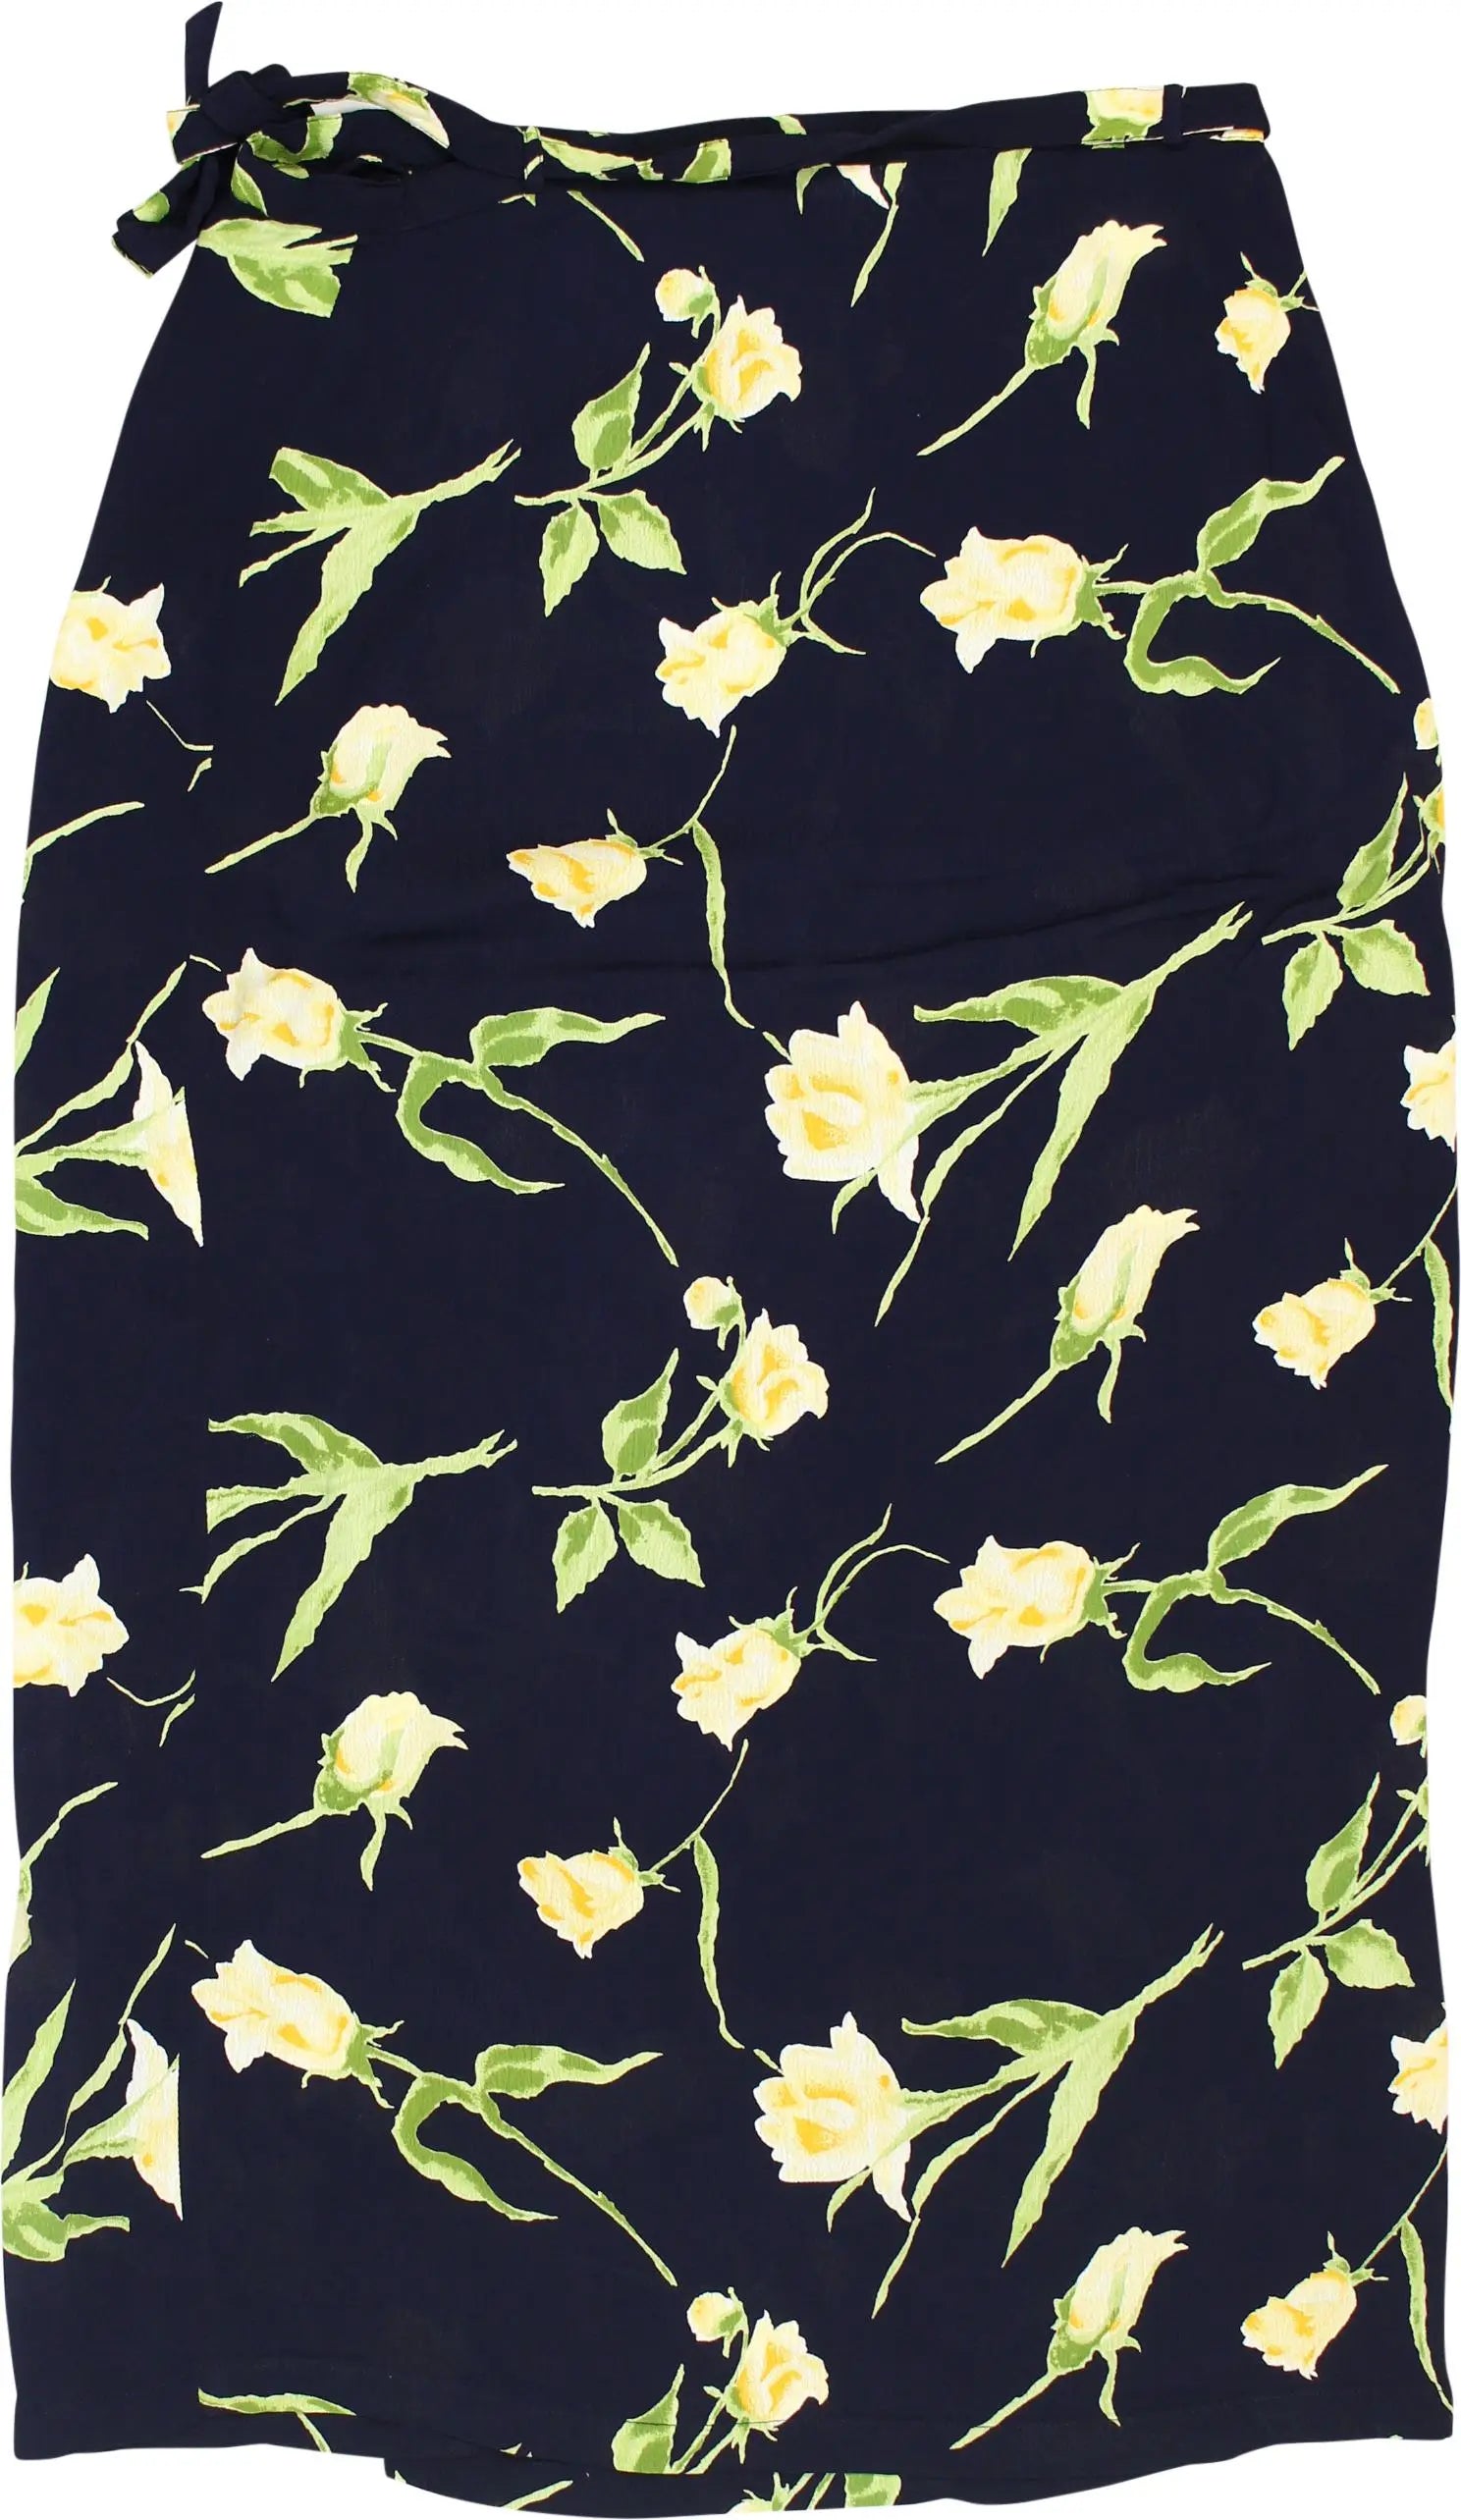 UMJ - 90s Floral Wrap Skirt- ThriftTale.com - Vintage and second handclothing